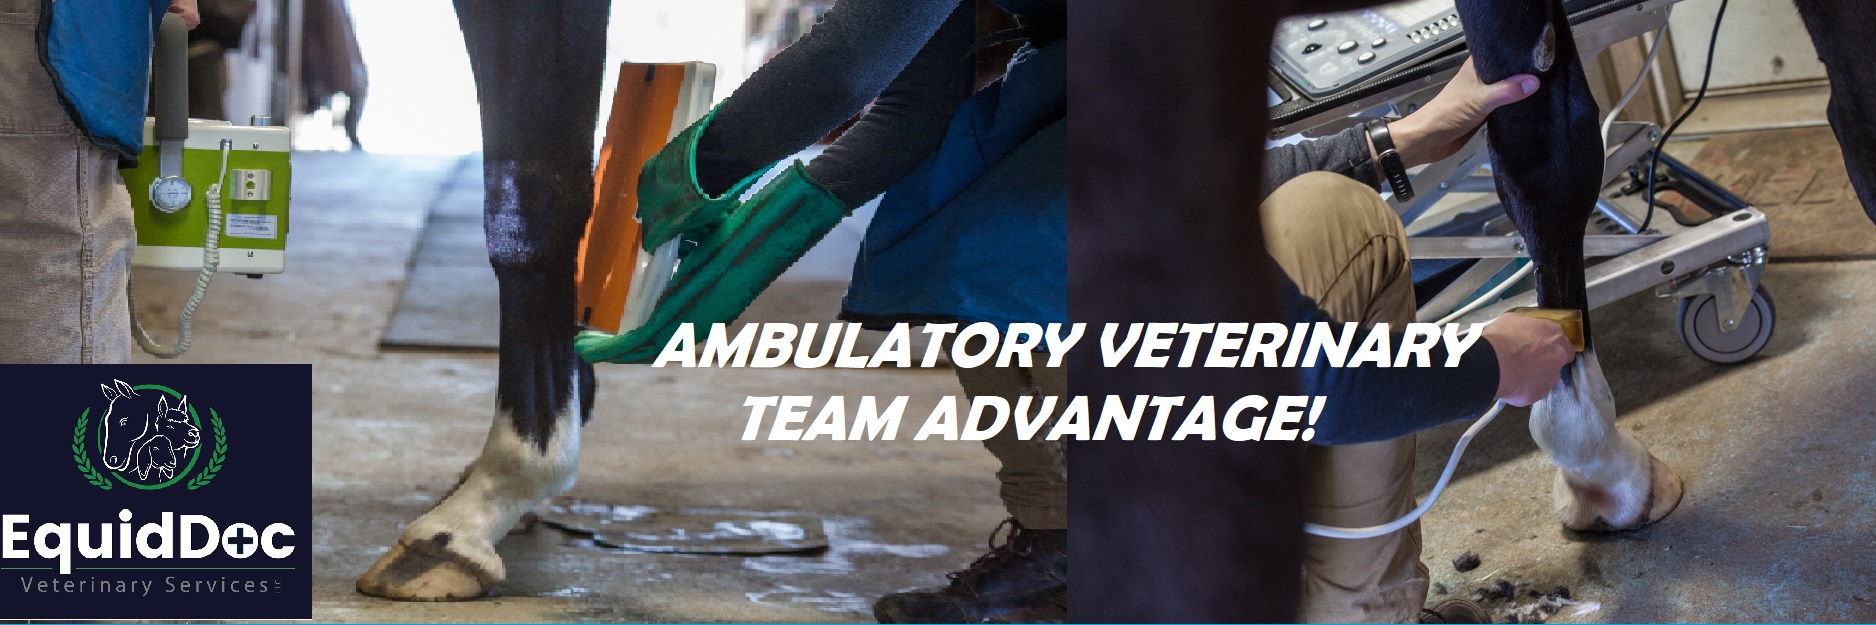 Ambulatory Veterinary Service